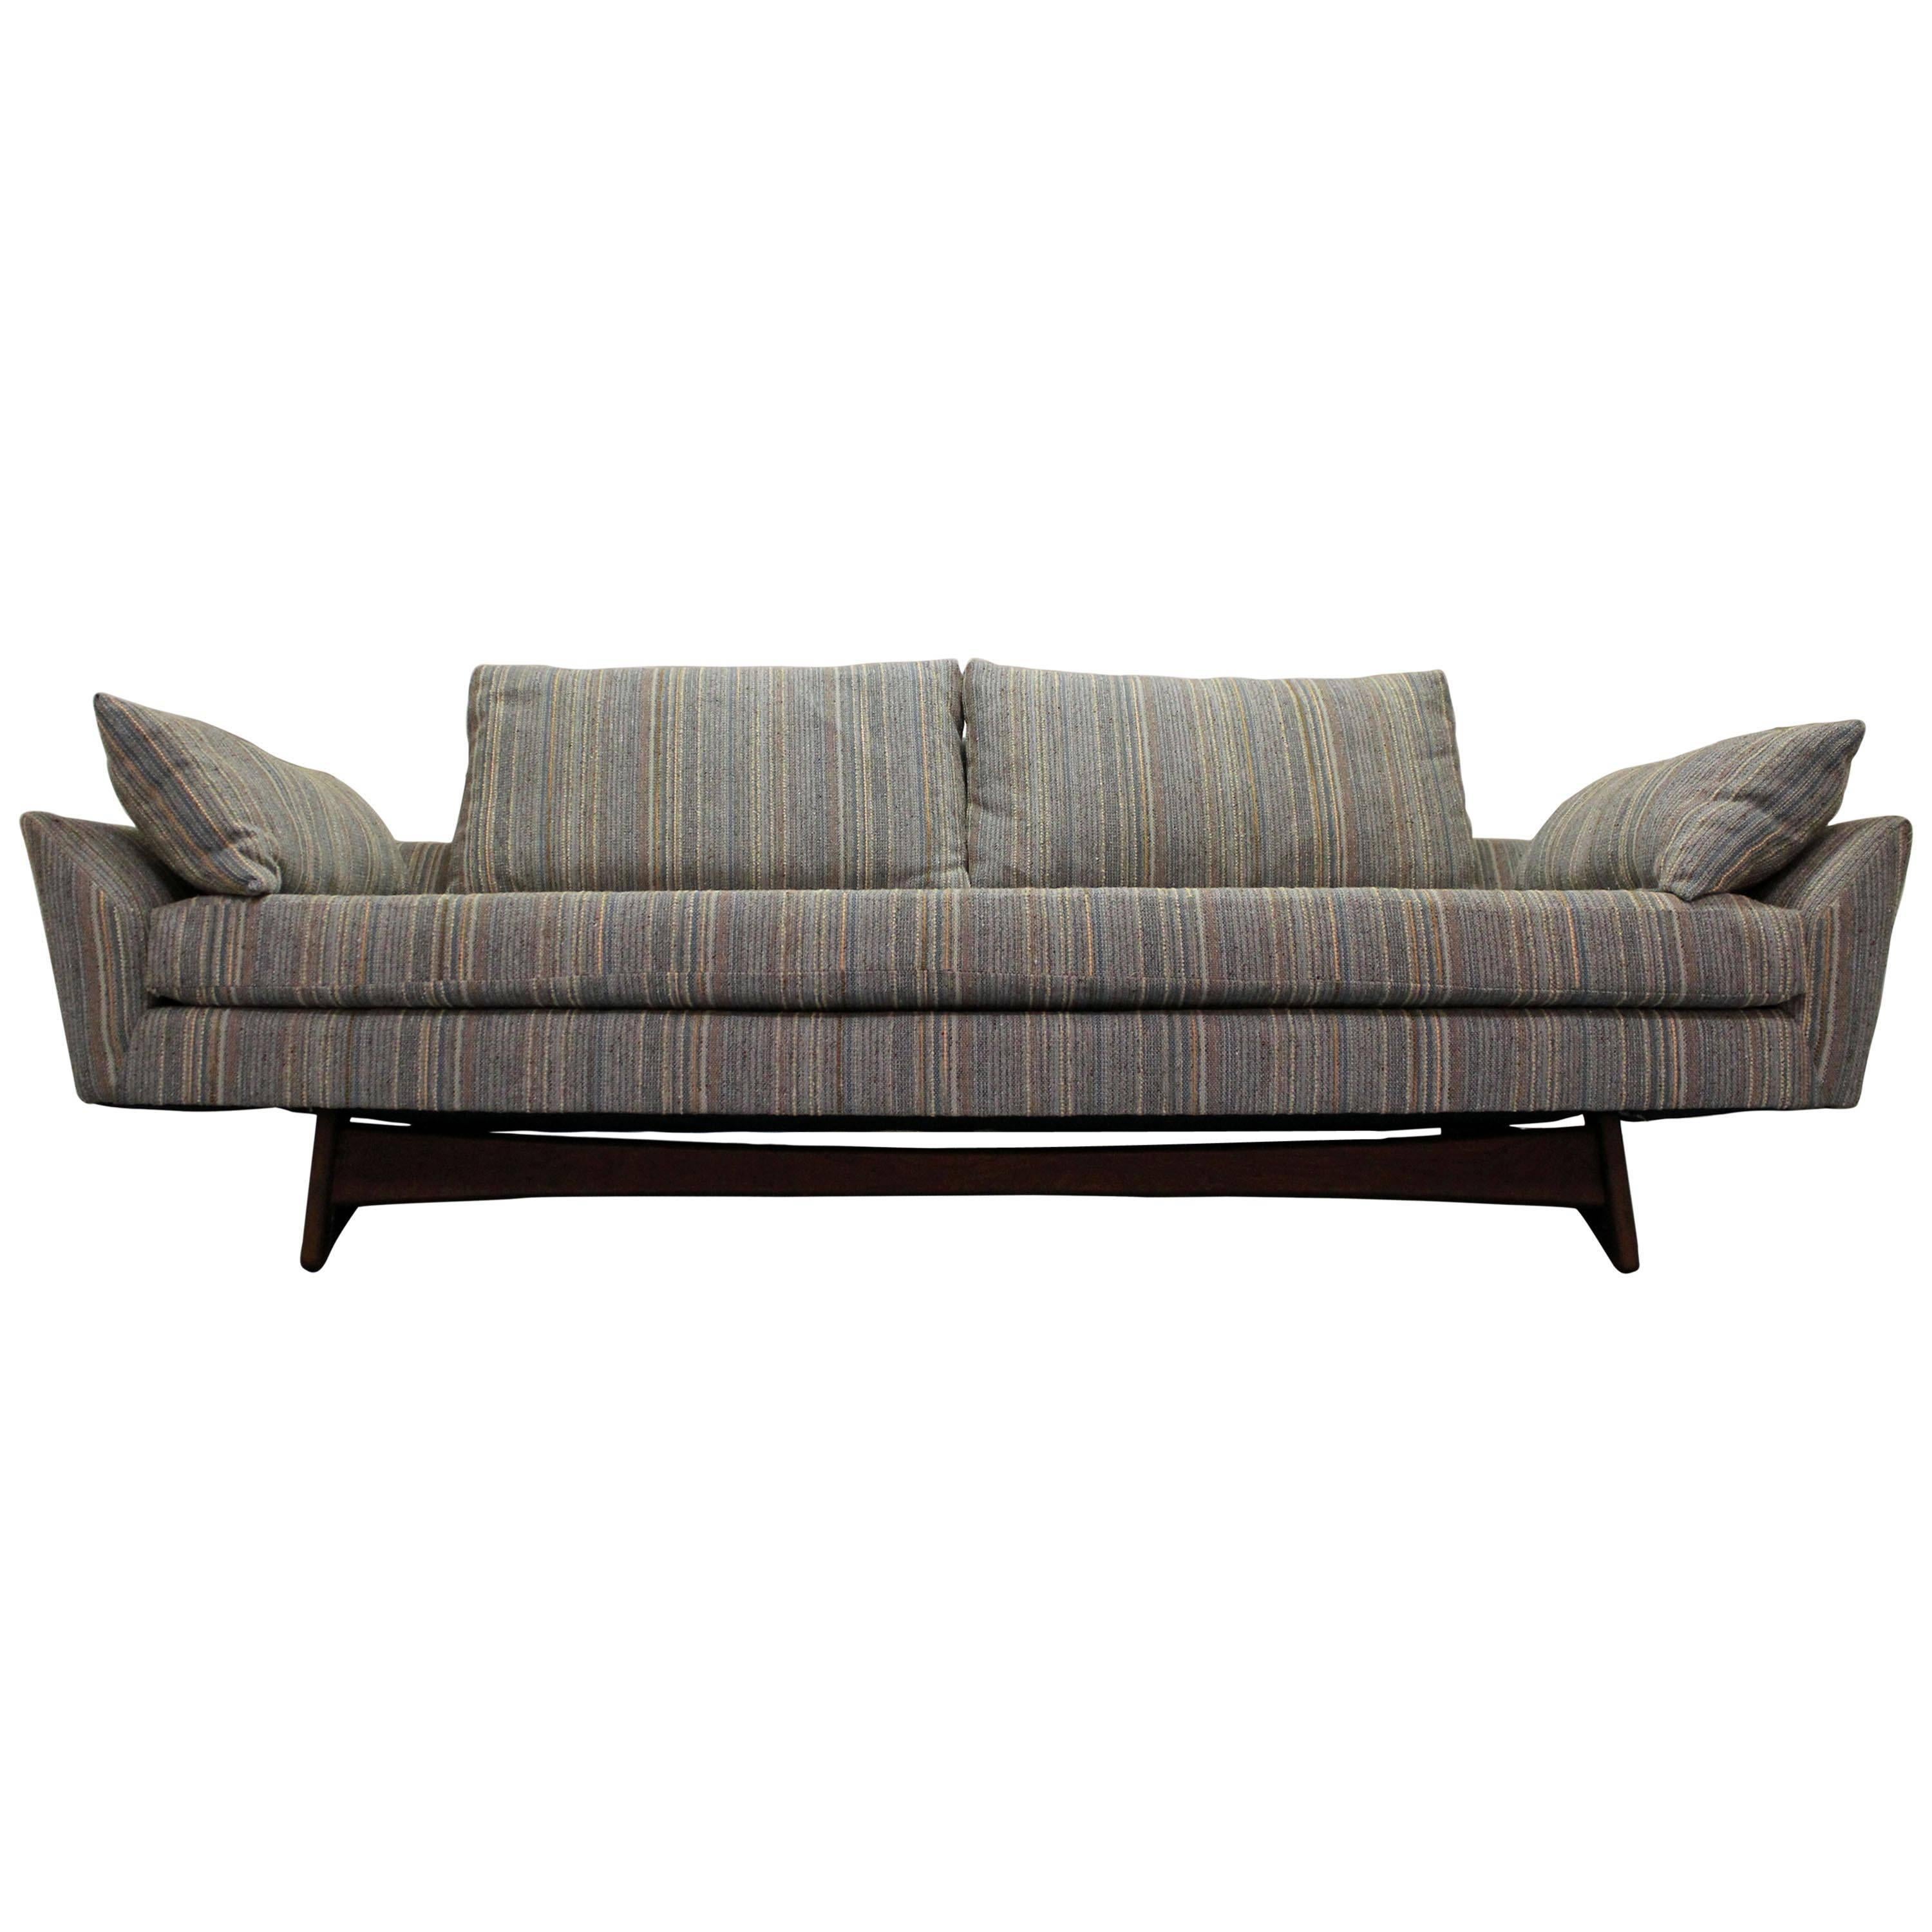 Mid-Century Modern Adrian Pearsall for Craft Associates Sofa 2408